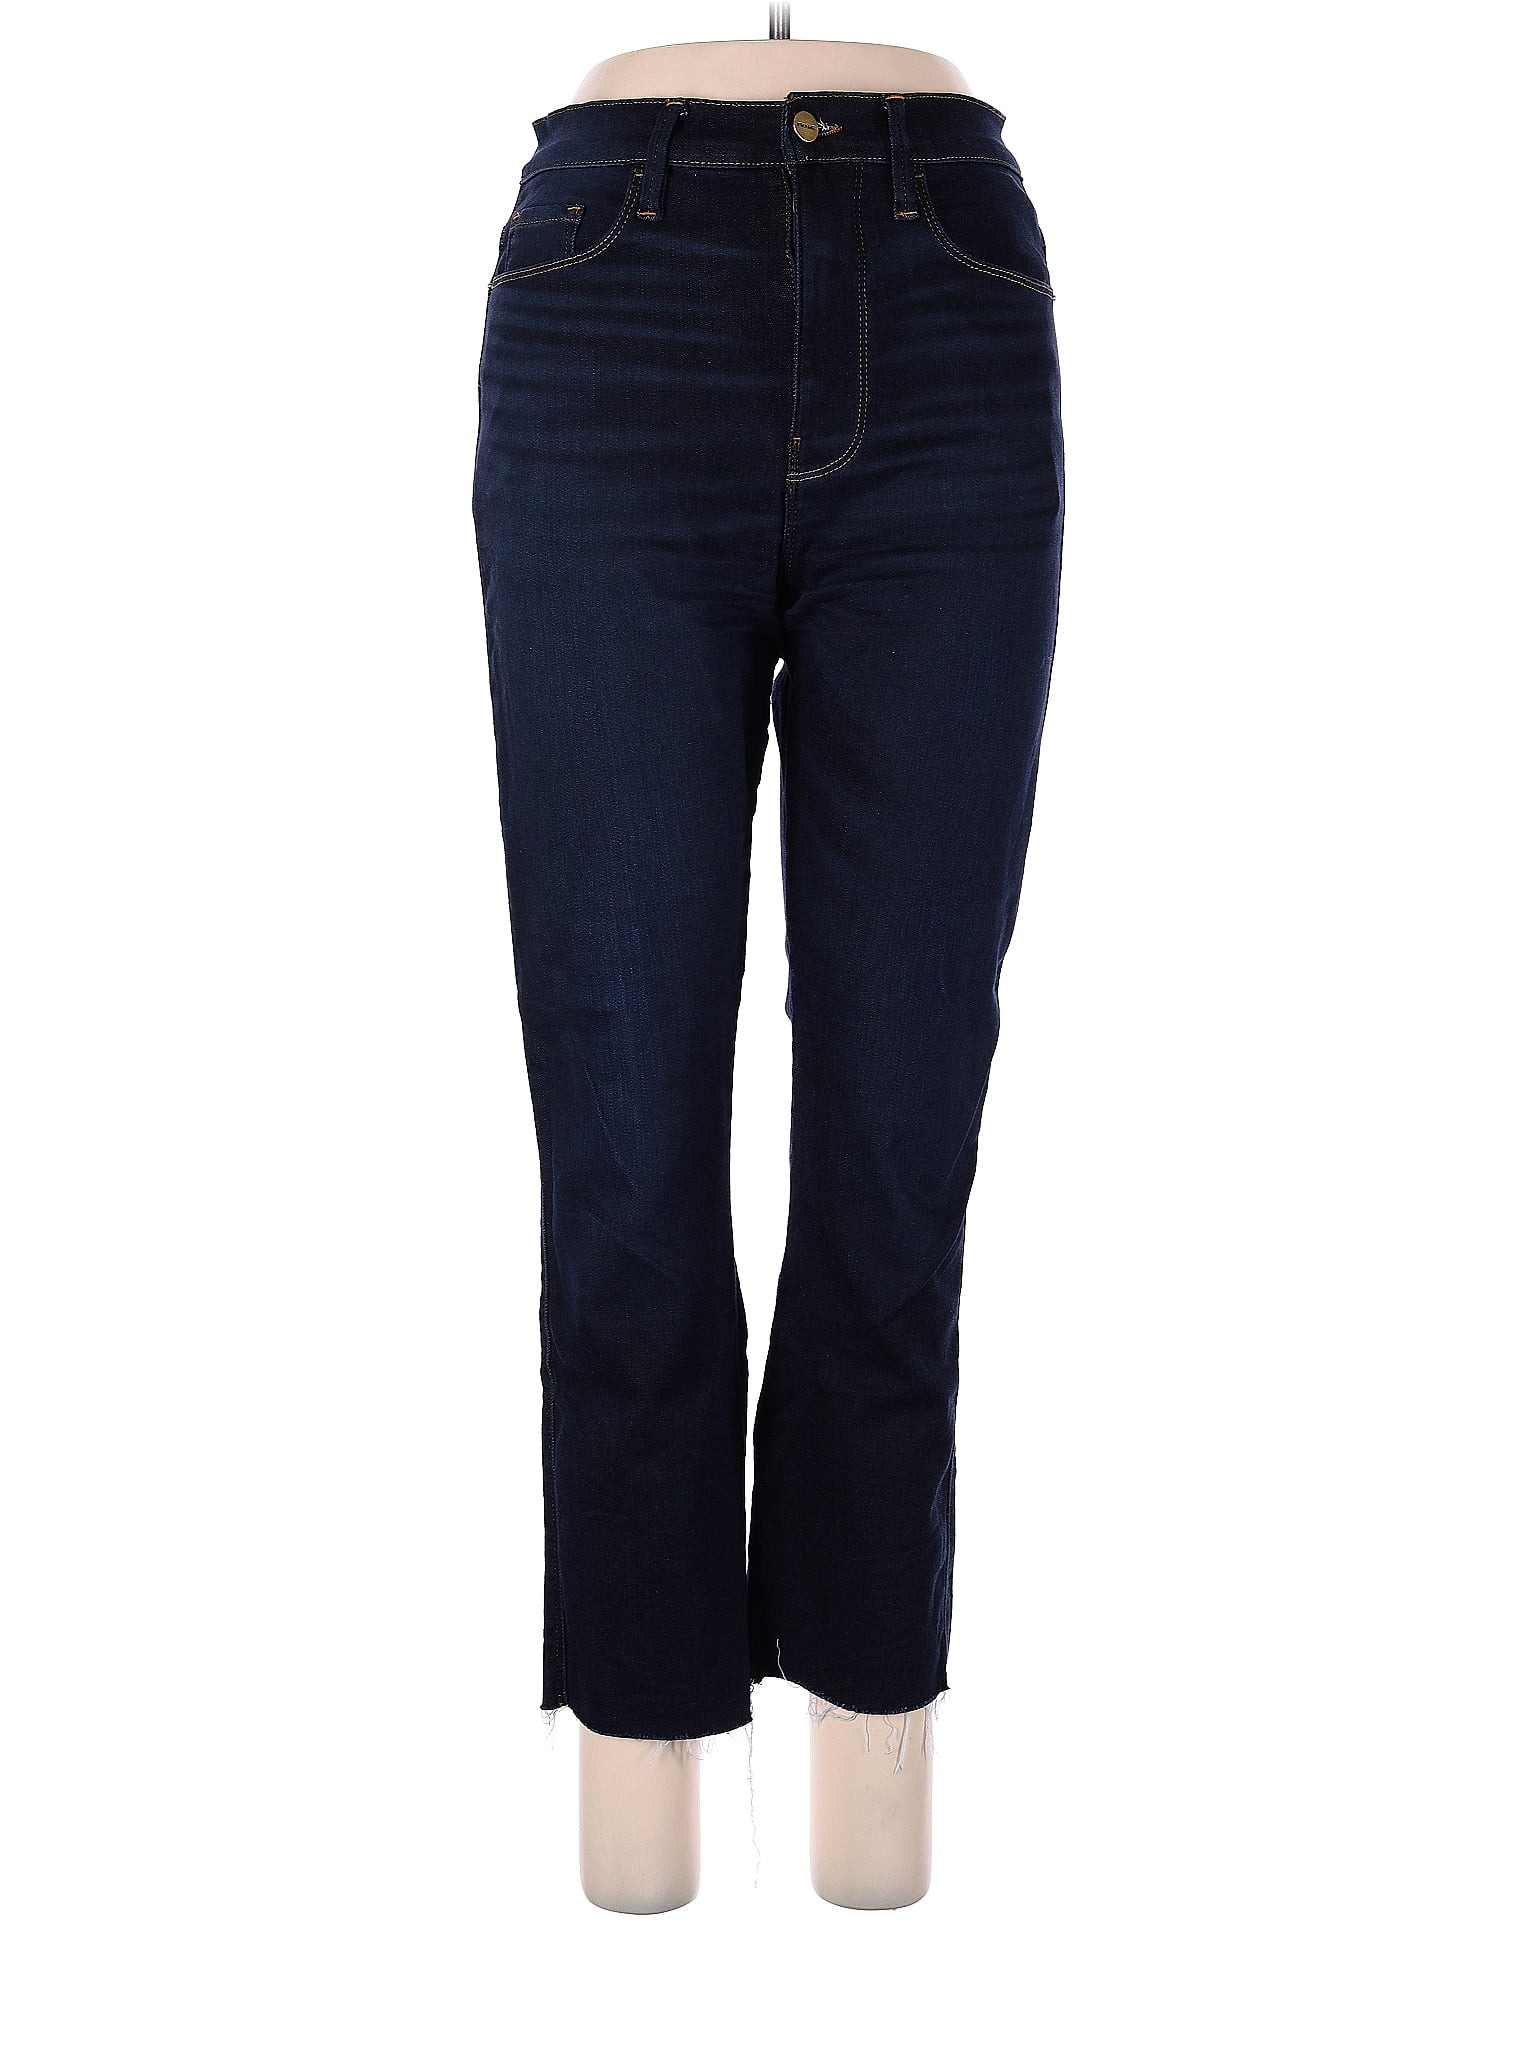 FRAME Blue Jeans 28 Waist - 79% off | thredUP